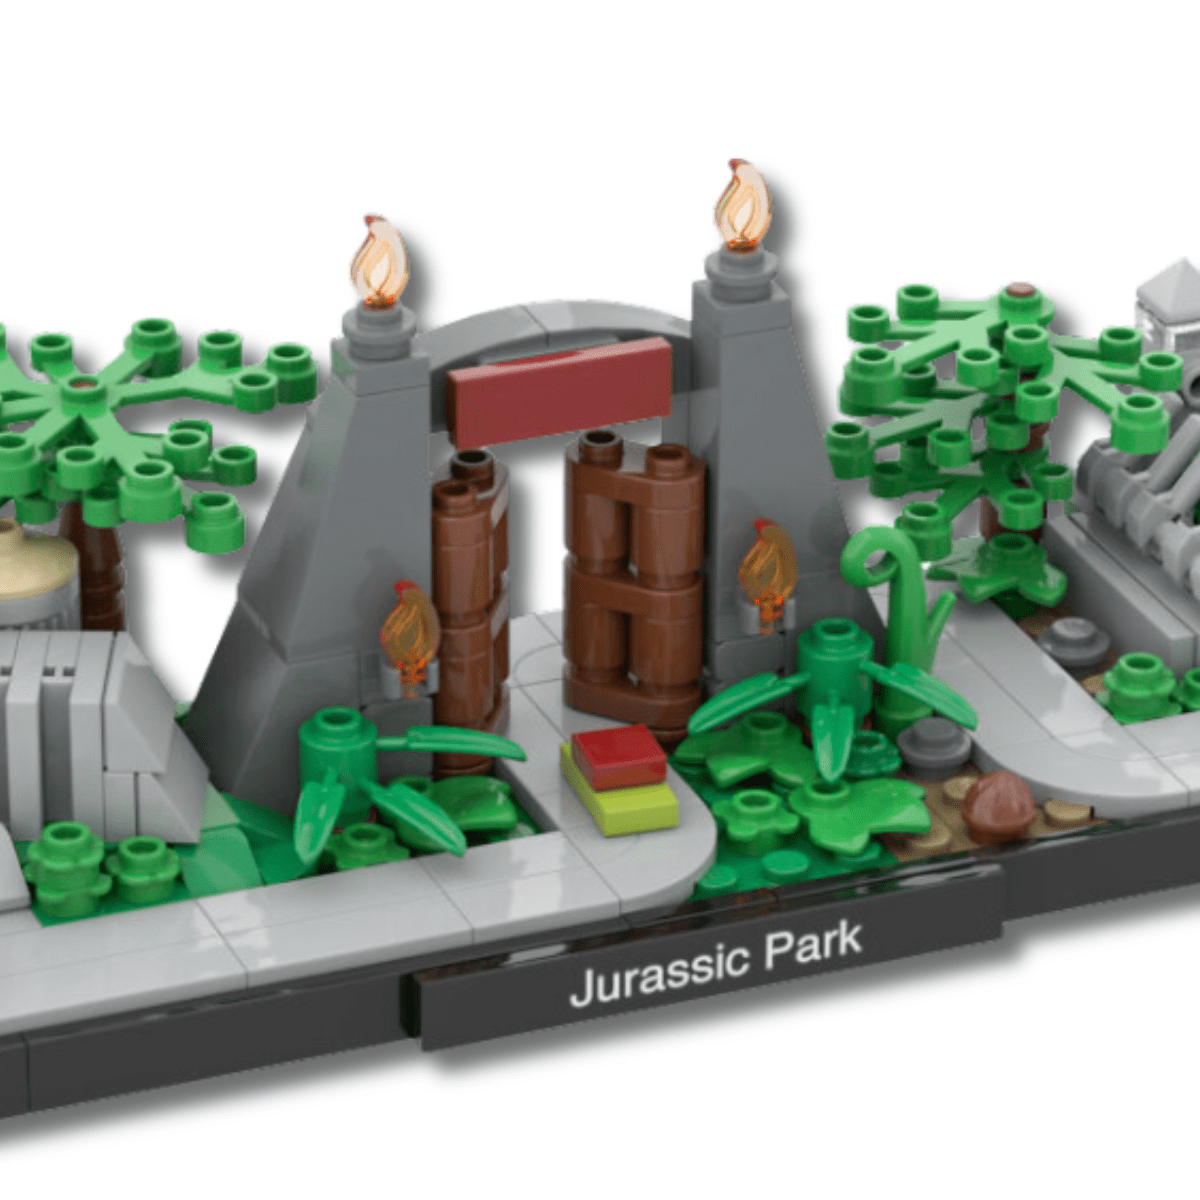 LEGO Jurassic Park Mini Diorama